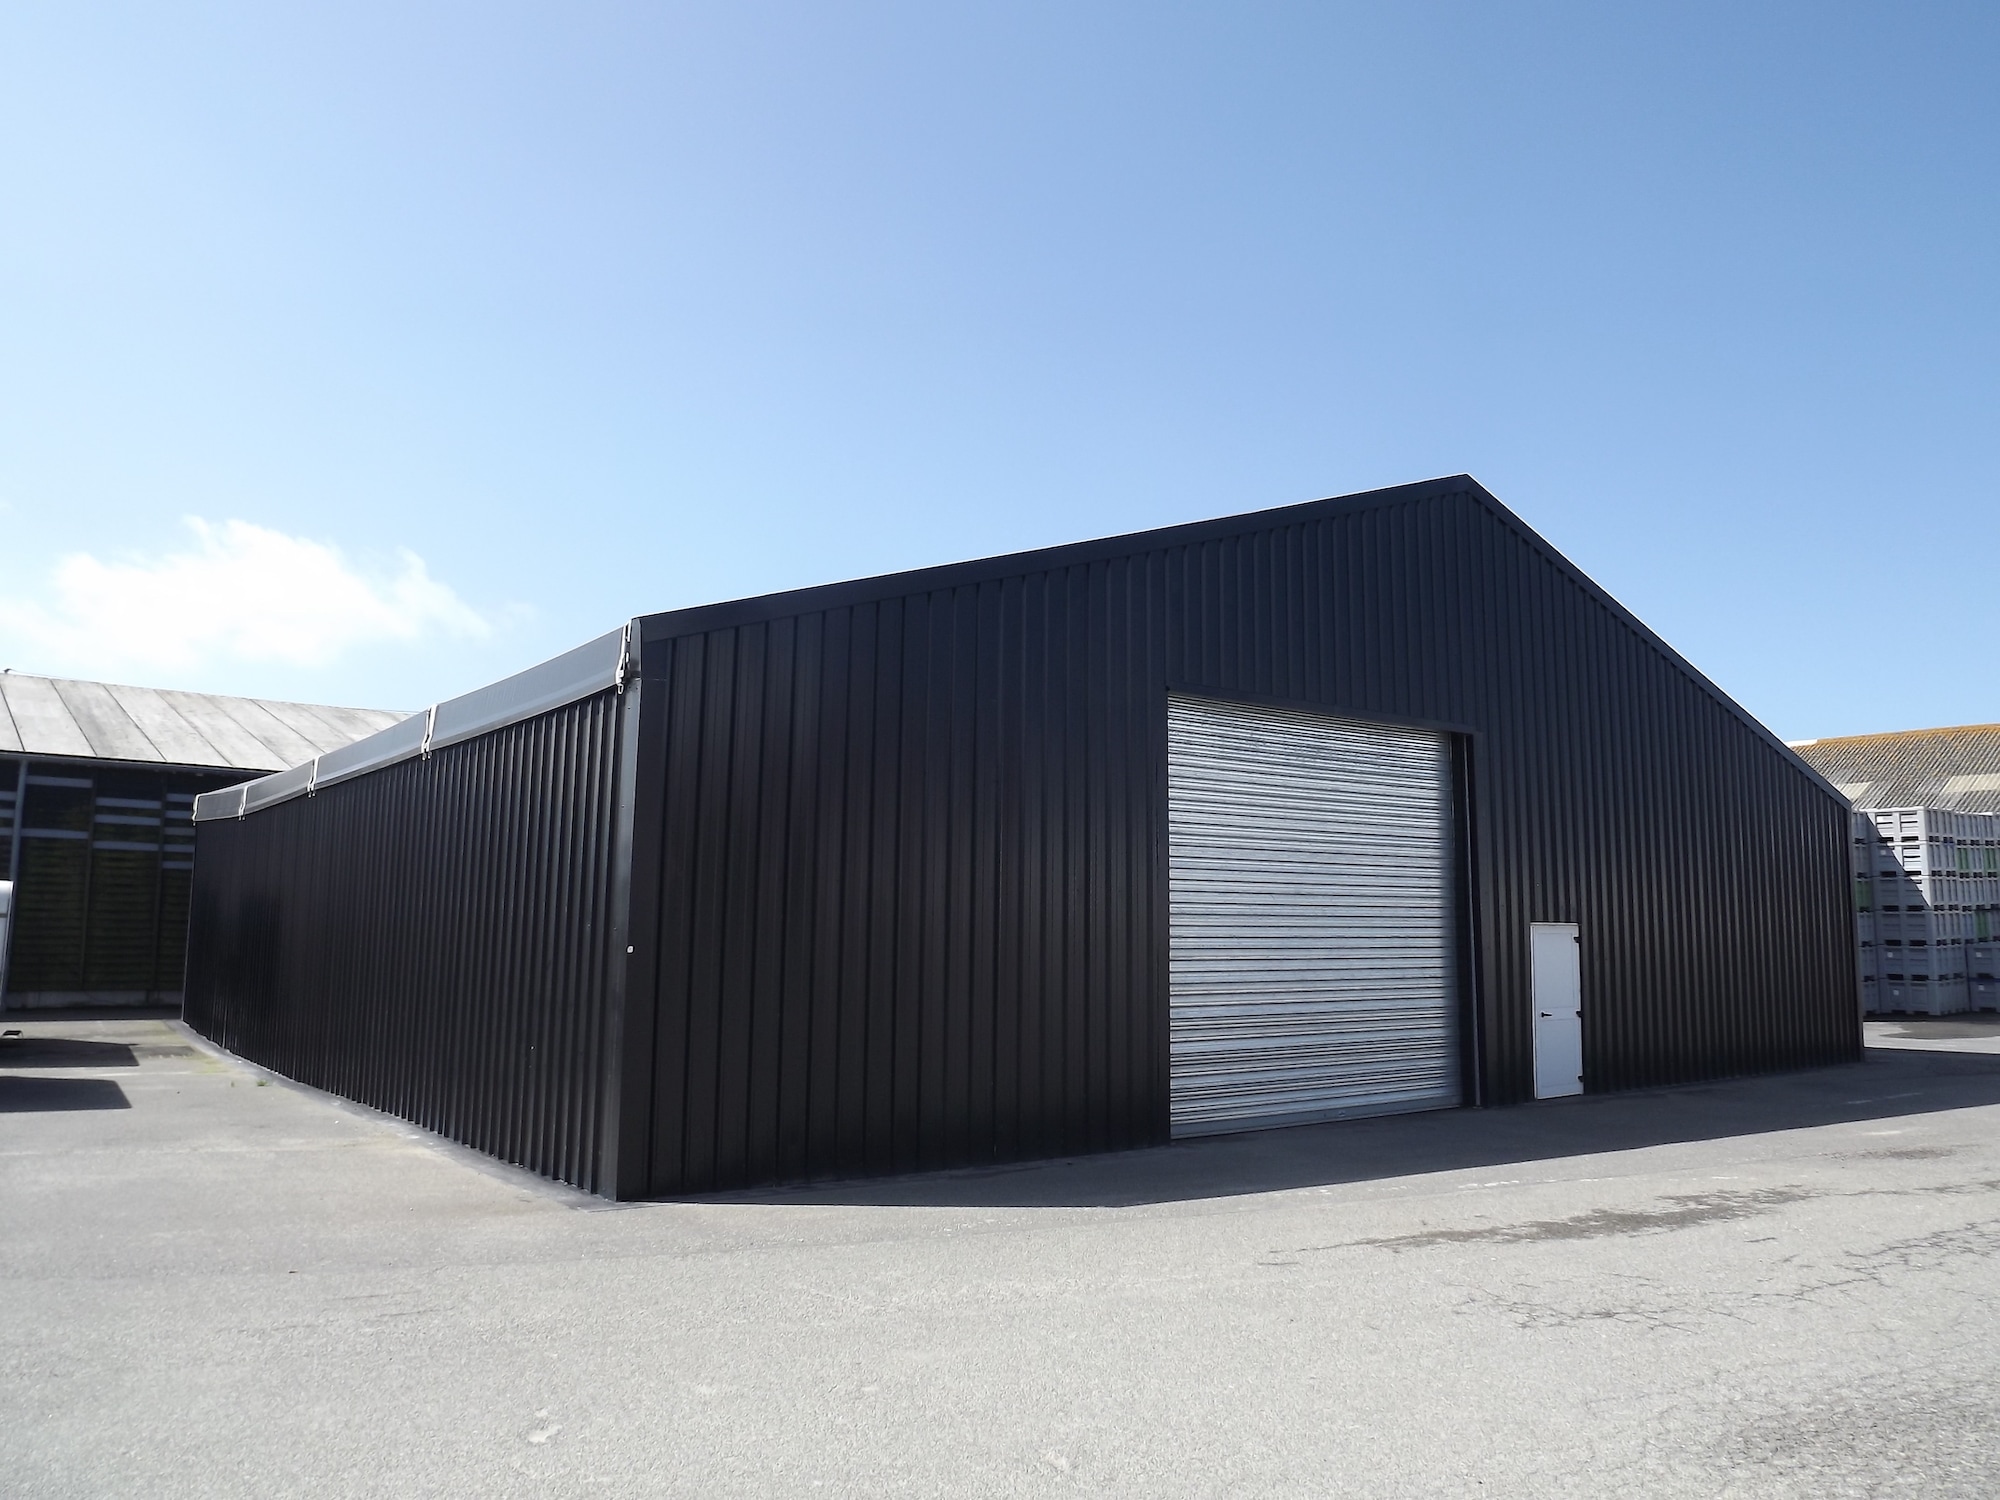 Dark coloured temporary building